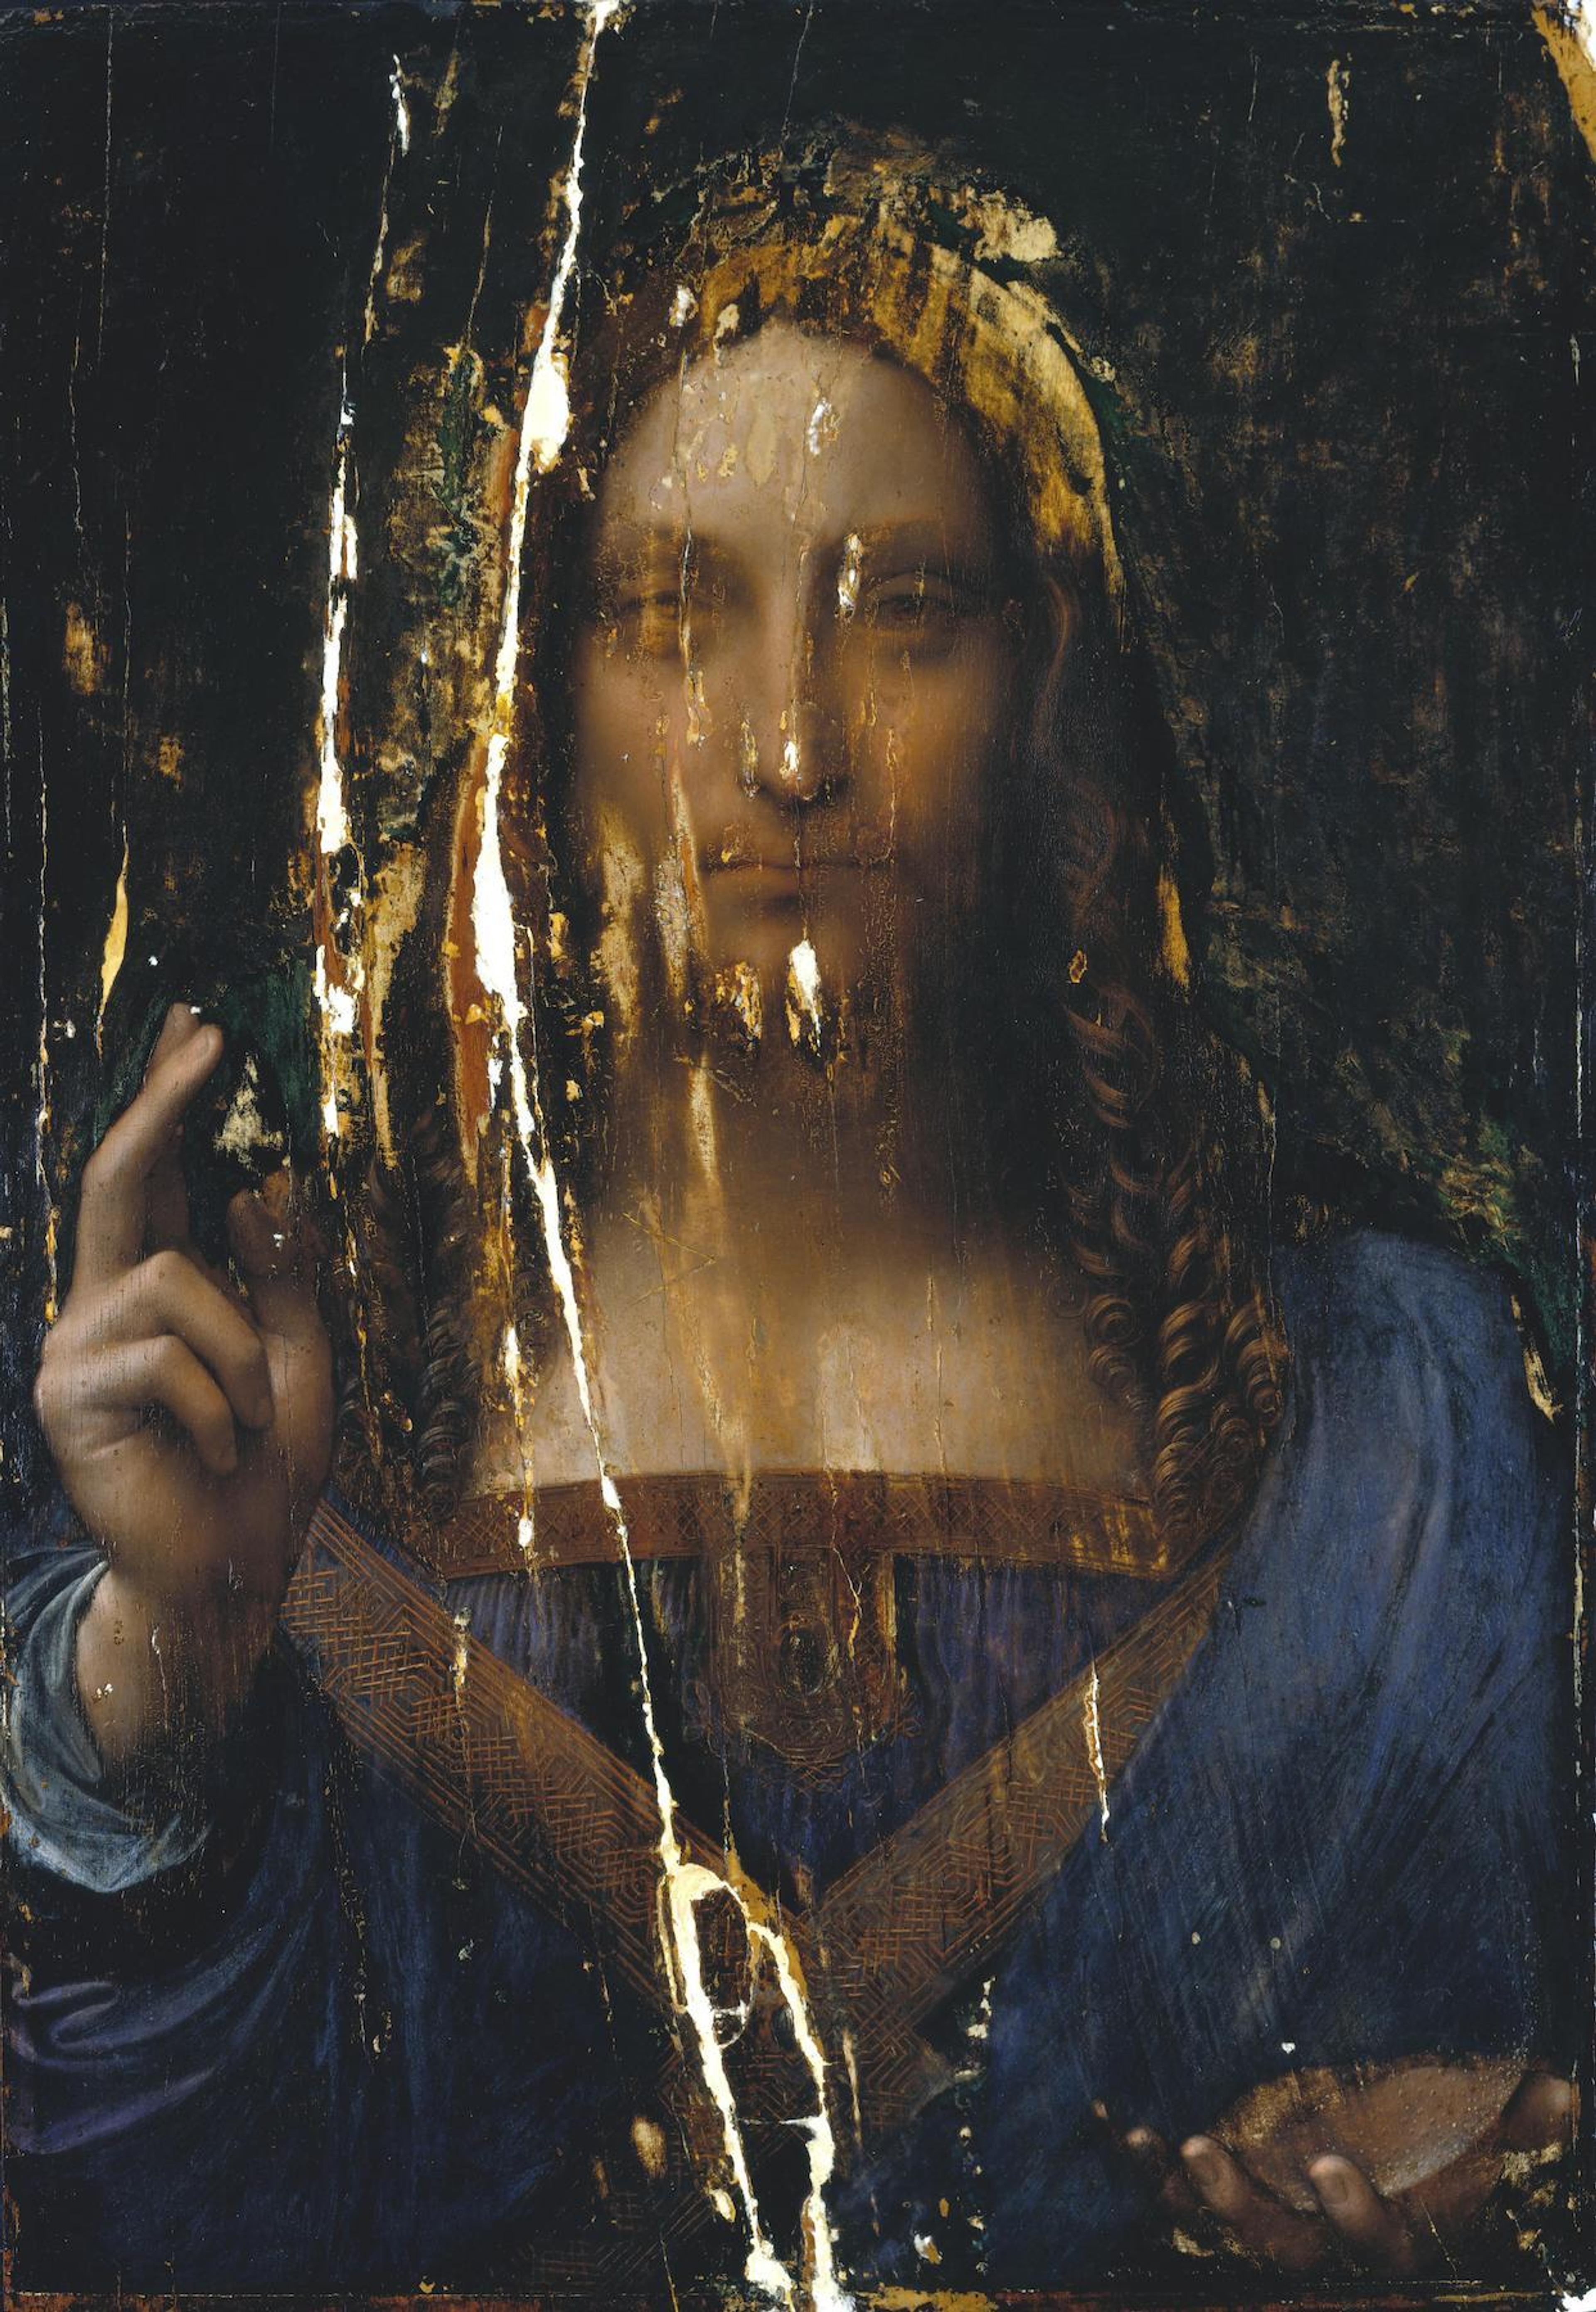 Leonardo da Vinci Salvator Mundi  (ca. 1500) after cleaning